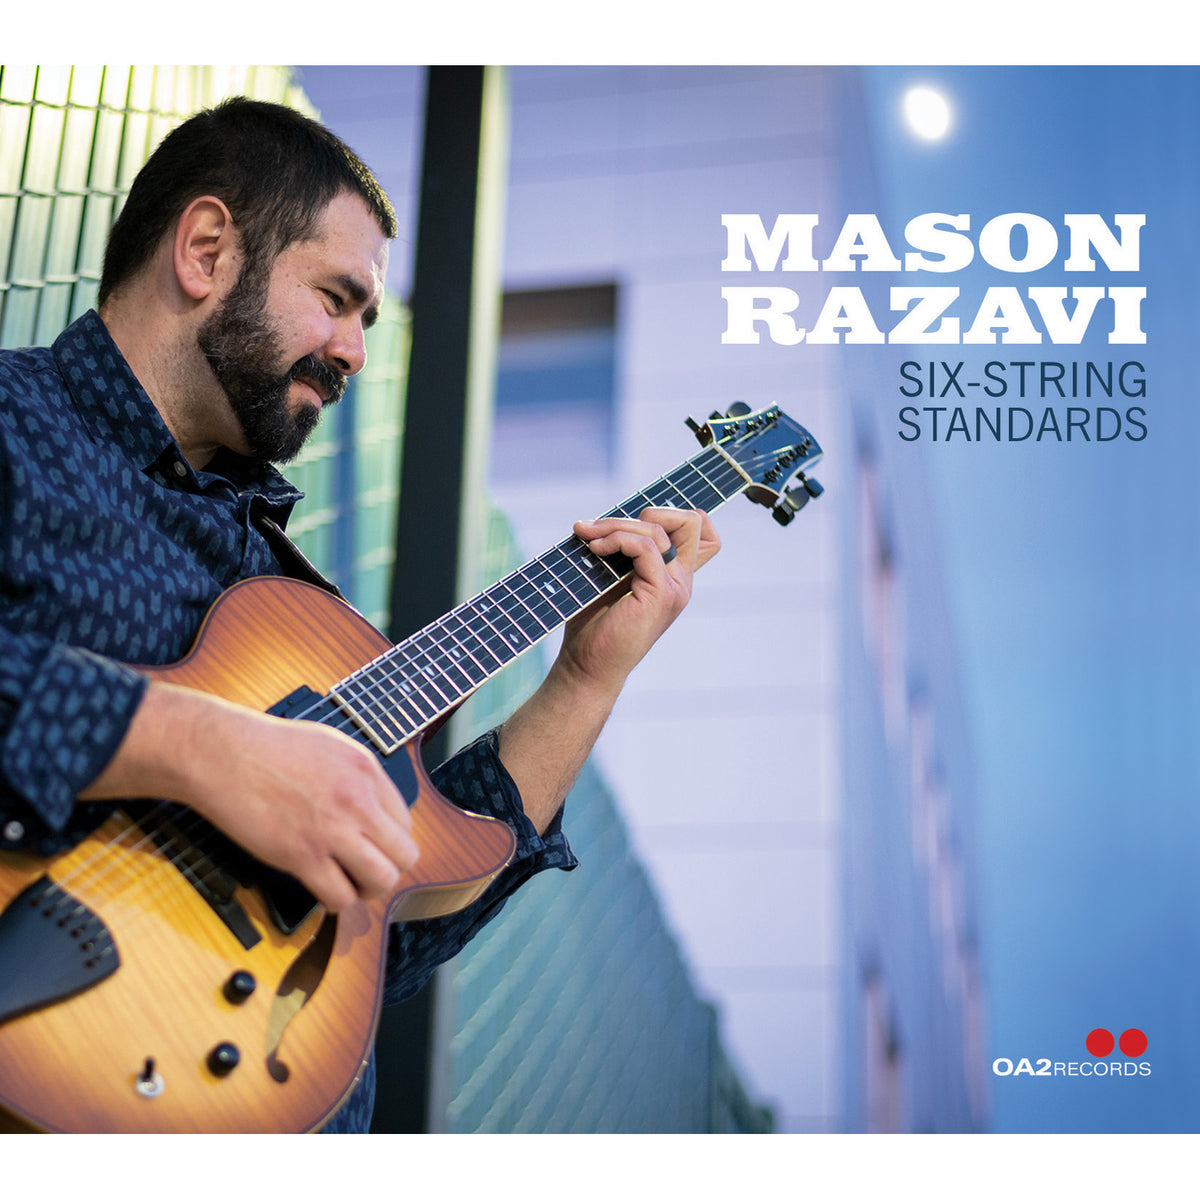 Mason Razavi - Six-String Standards - OA222210